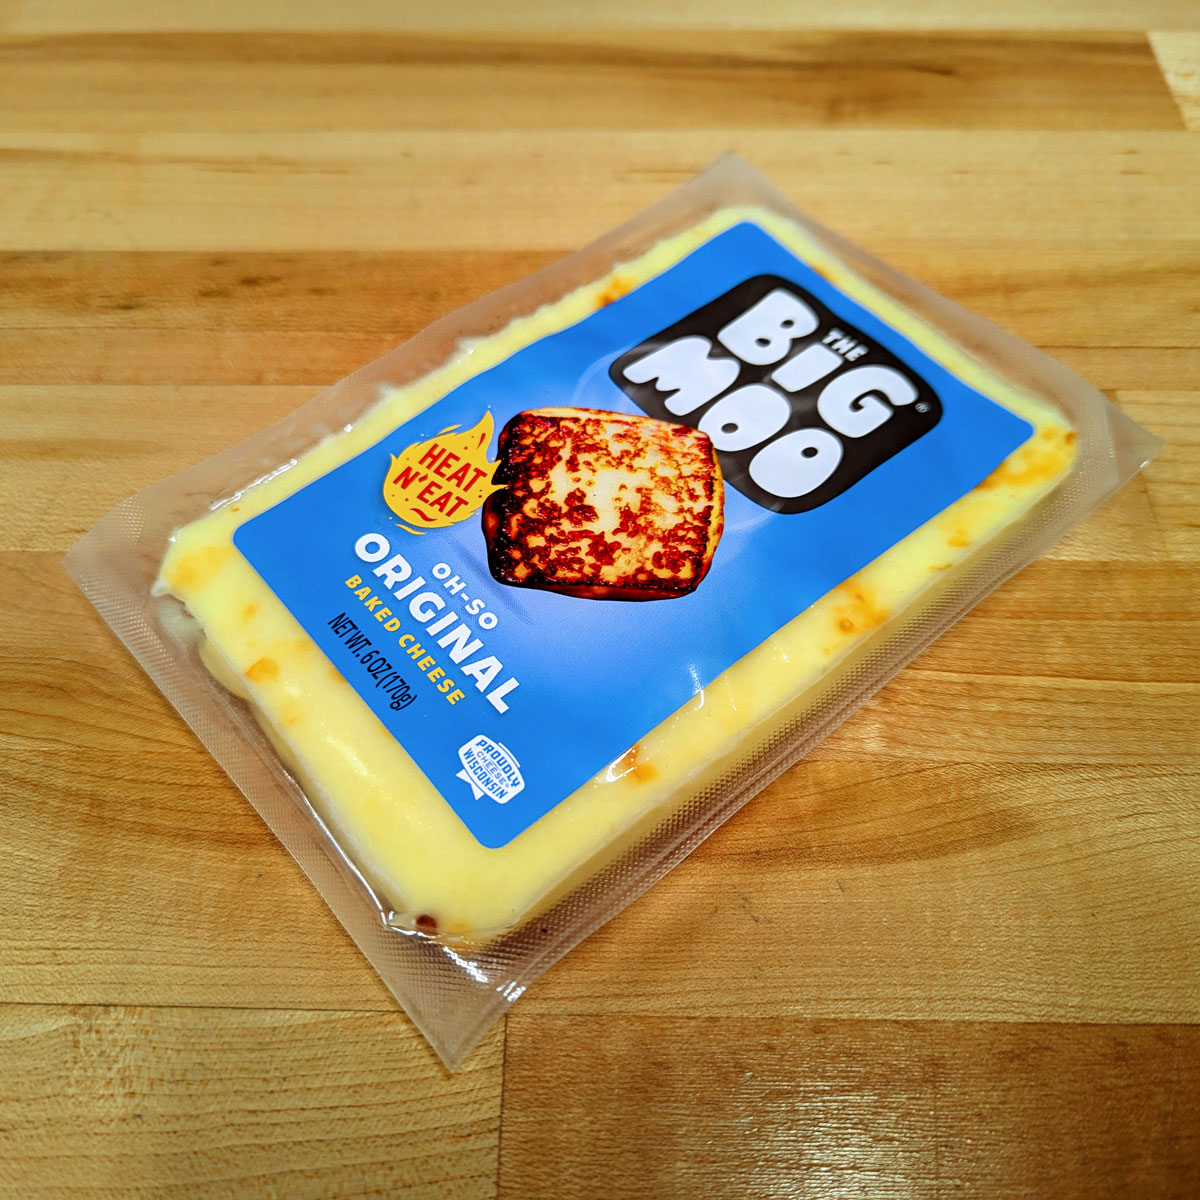 The Big Moo Oh-So Original Baked Cheese (8 oz.)